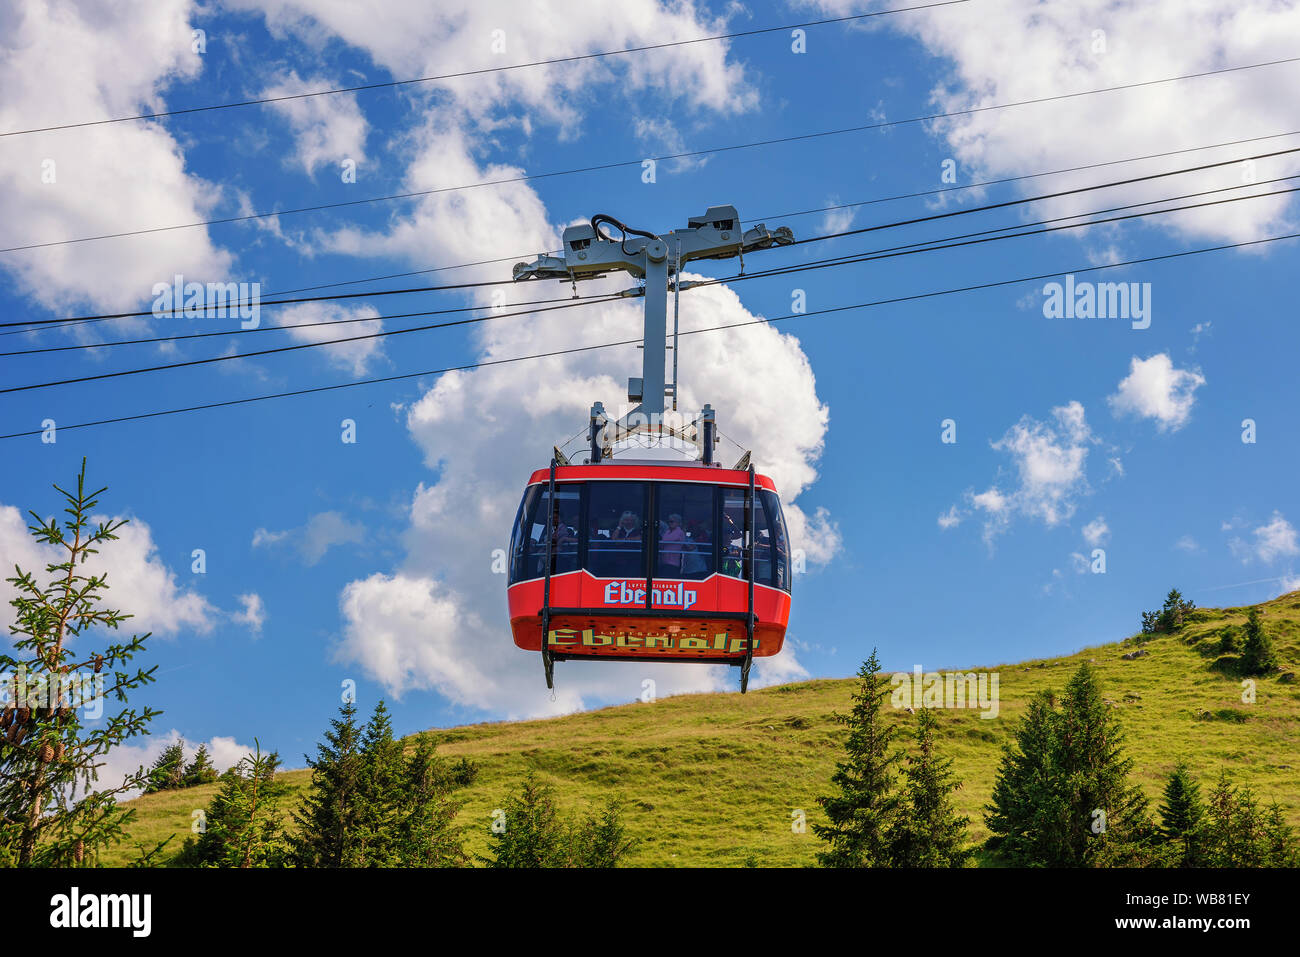 - Cable Ebenalp Wasserauen vagón en los Alpes suizos en Suiza Foto de stock